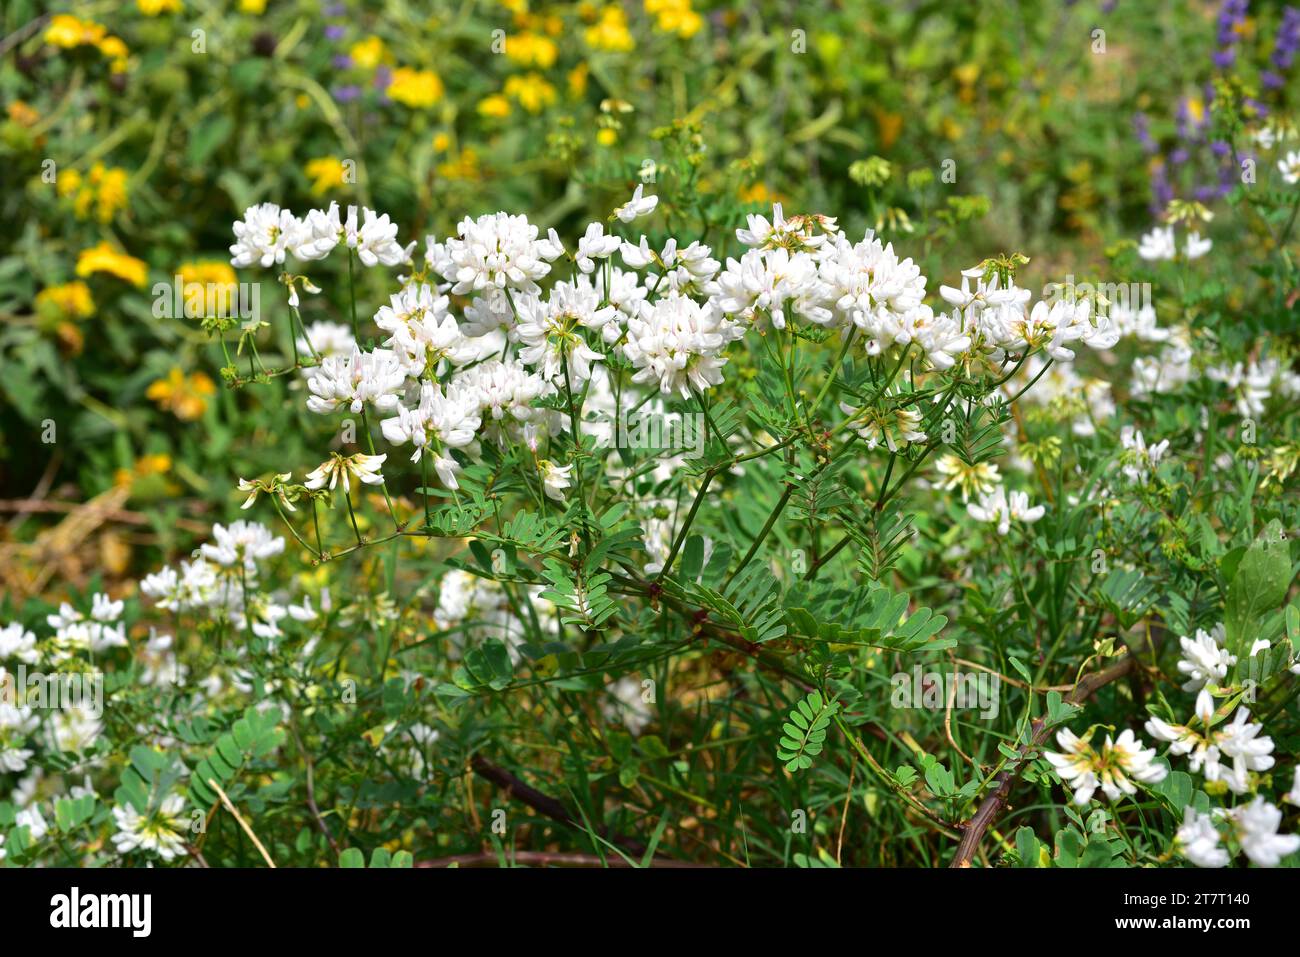 White crownvetch (Coronilla globosa or Securigera globosa) is a shrub endemic to Crete, Greece. Blooming plant. Stock Photo